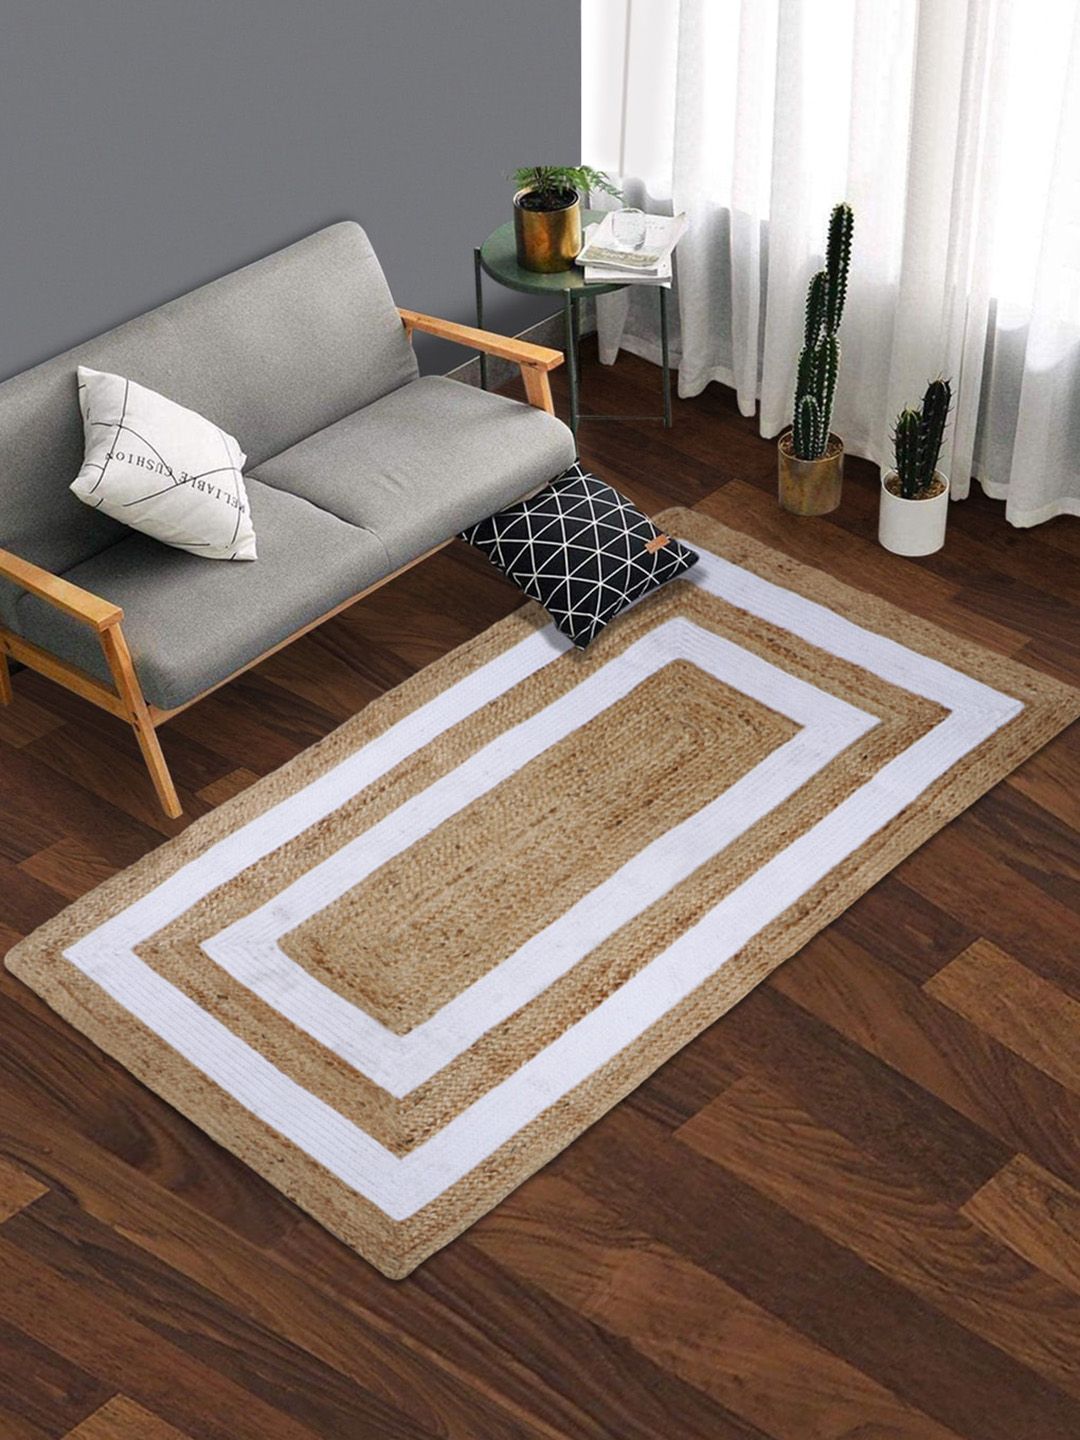 HomeStorie Beige & White Geometric Handmade Cotton Jute Carpet Price in India